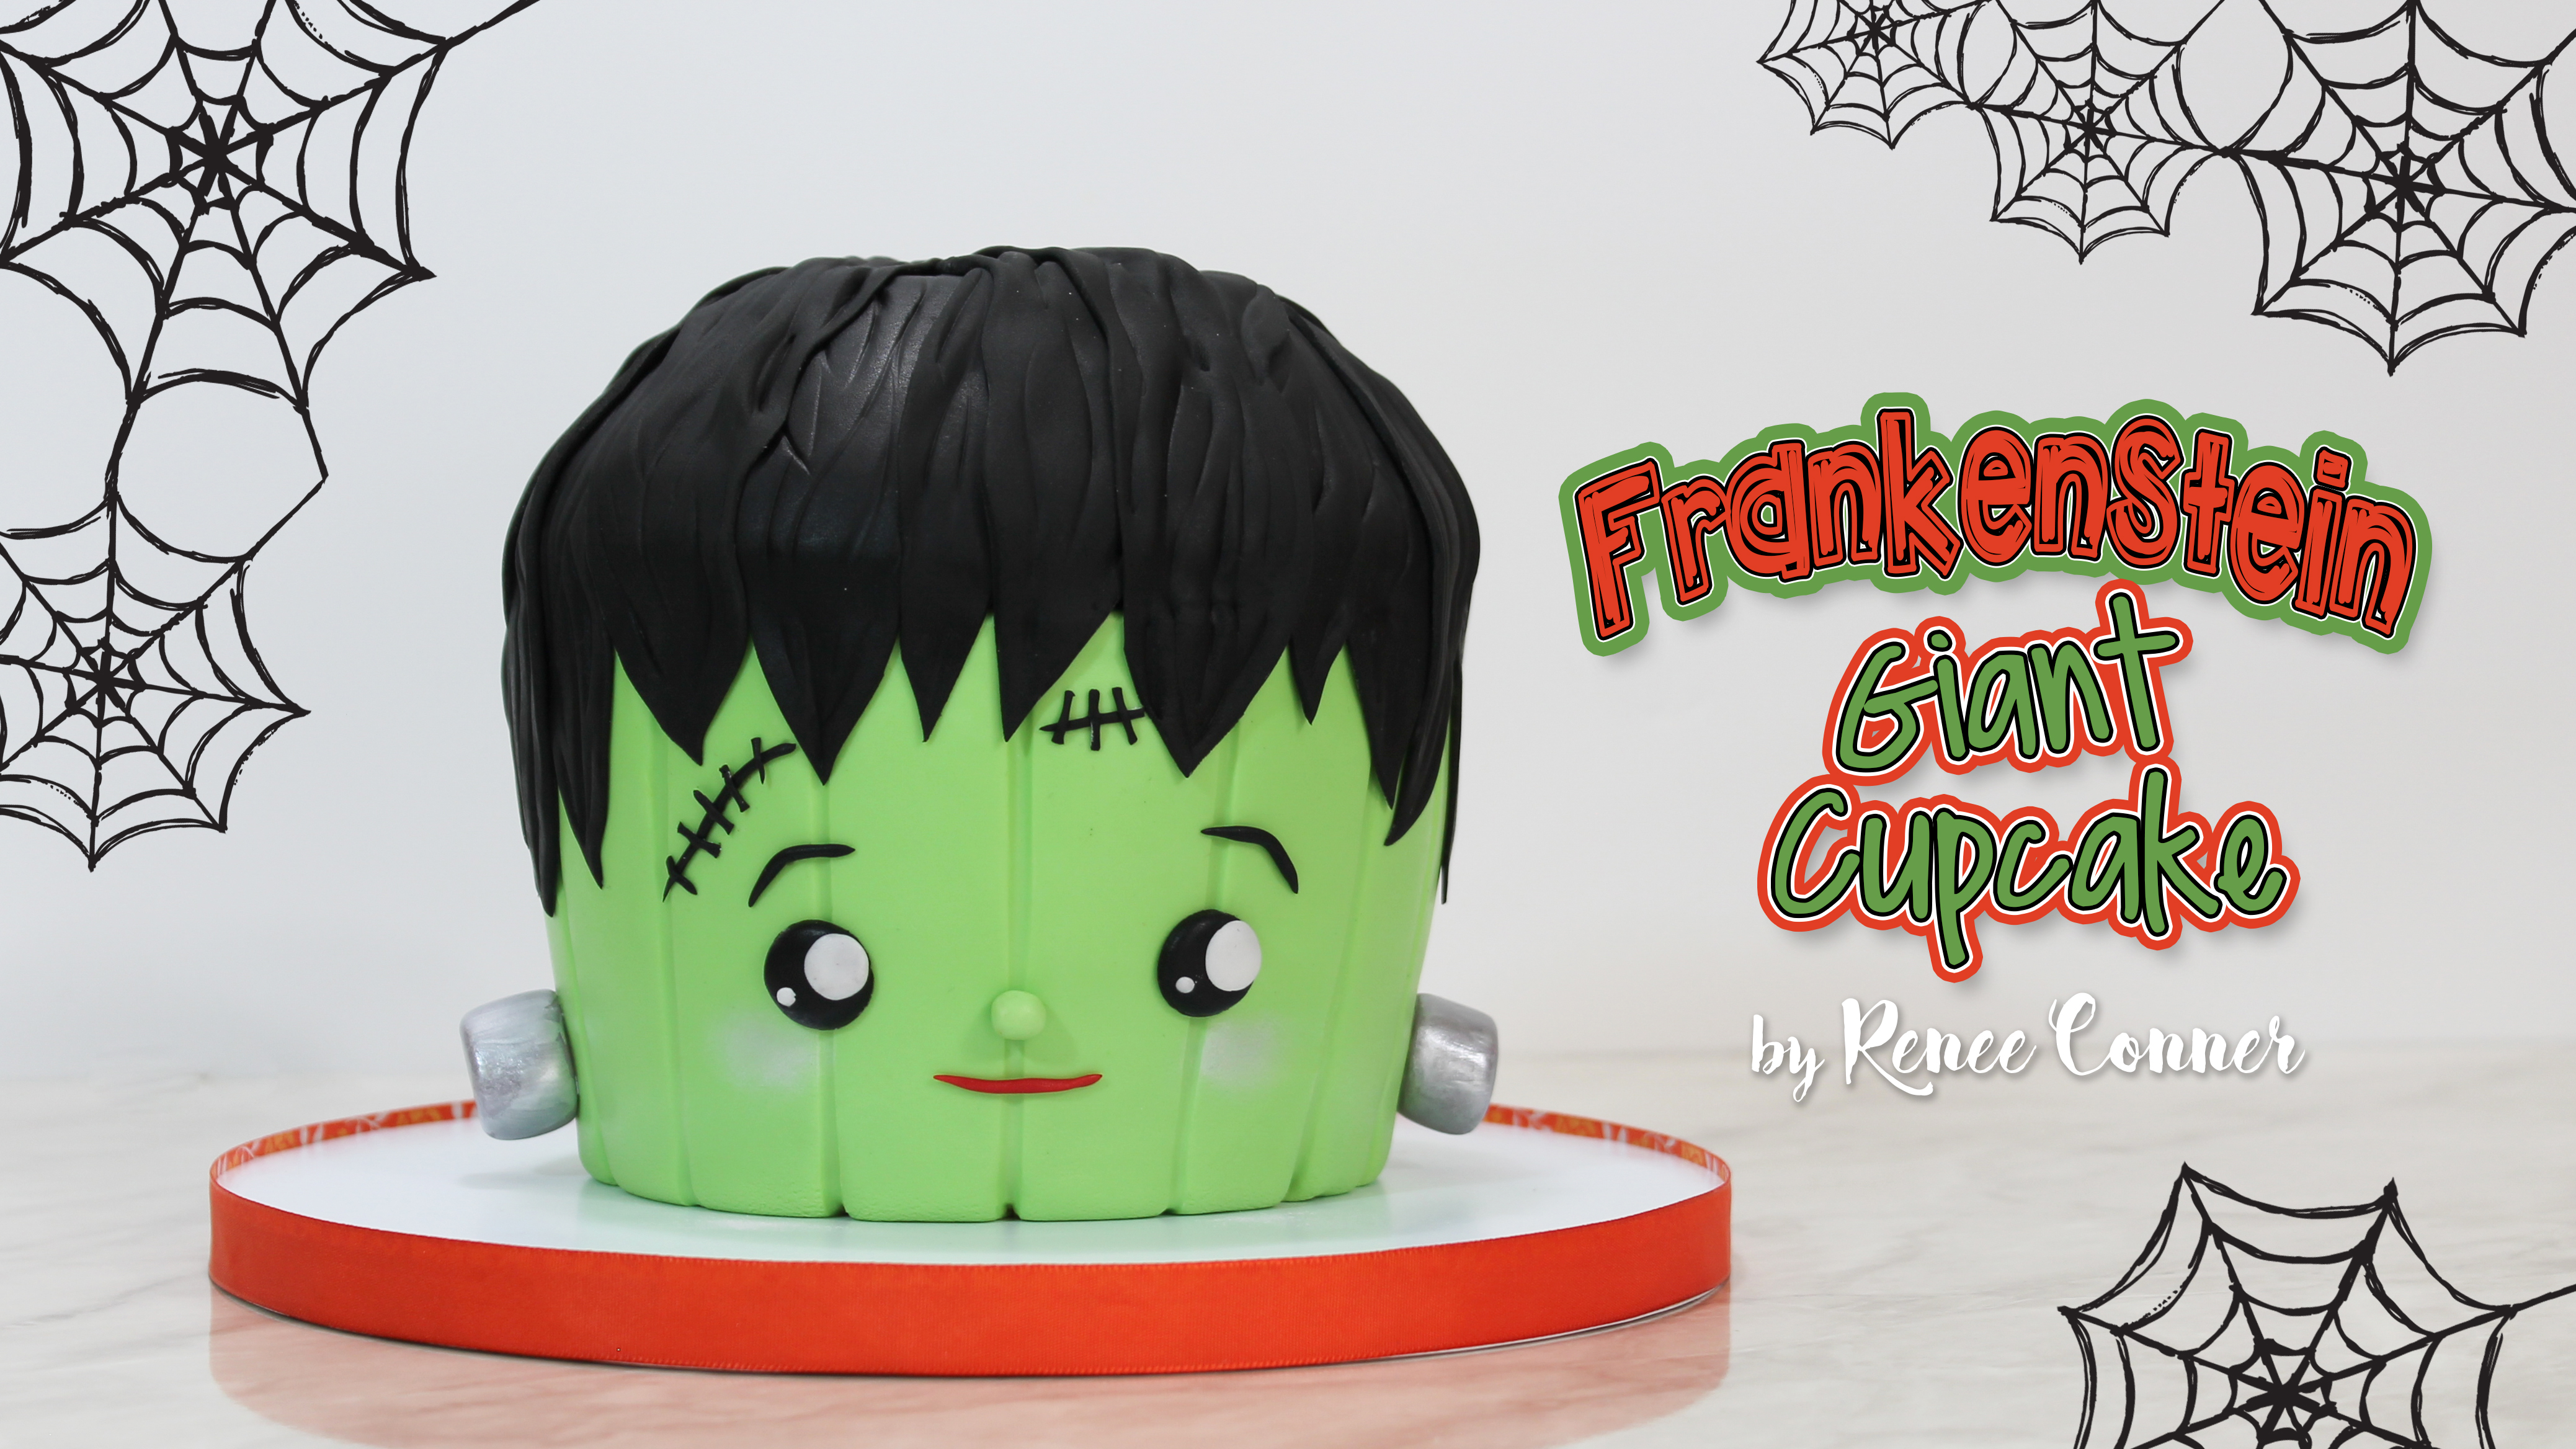 Frankenstein Giant Cupcake!